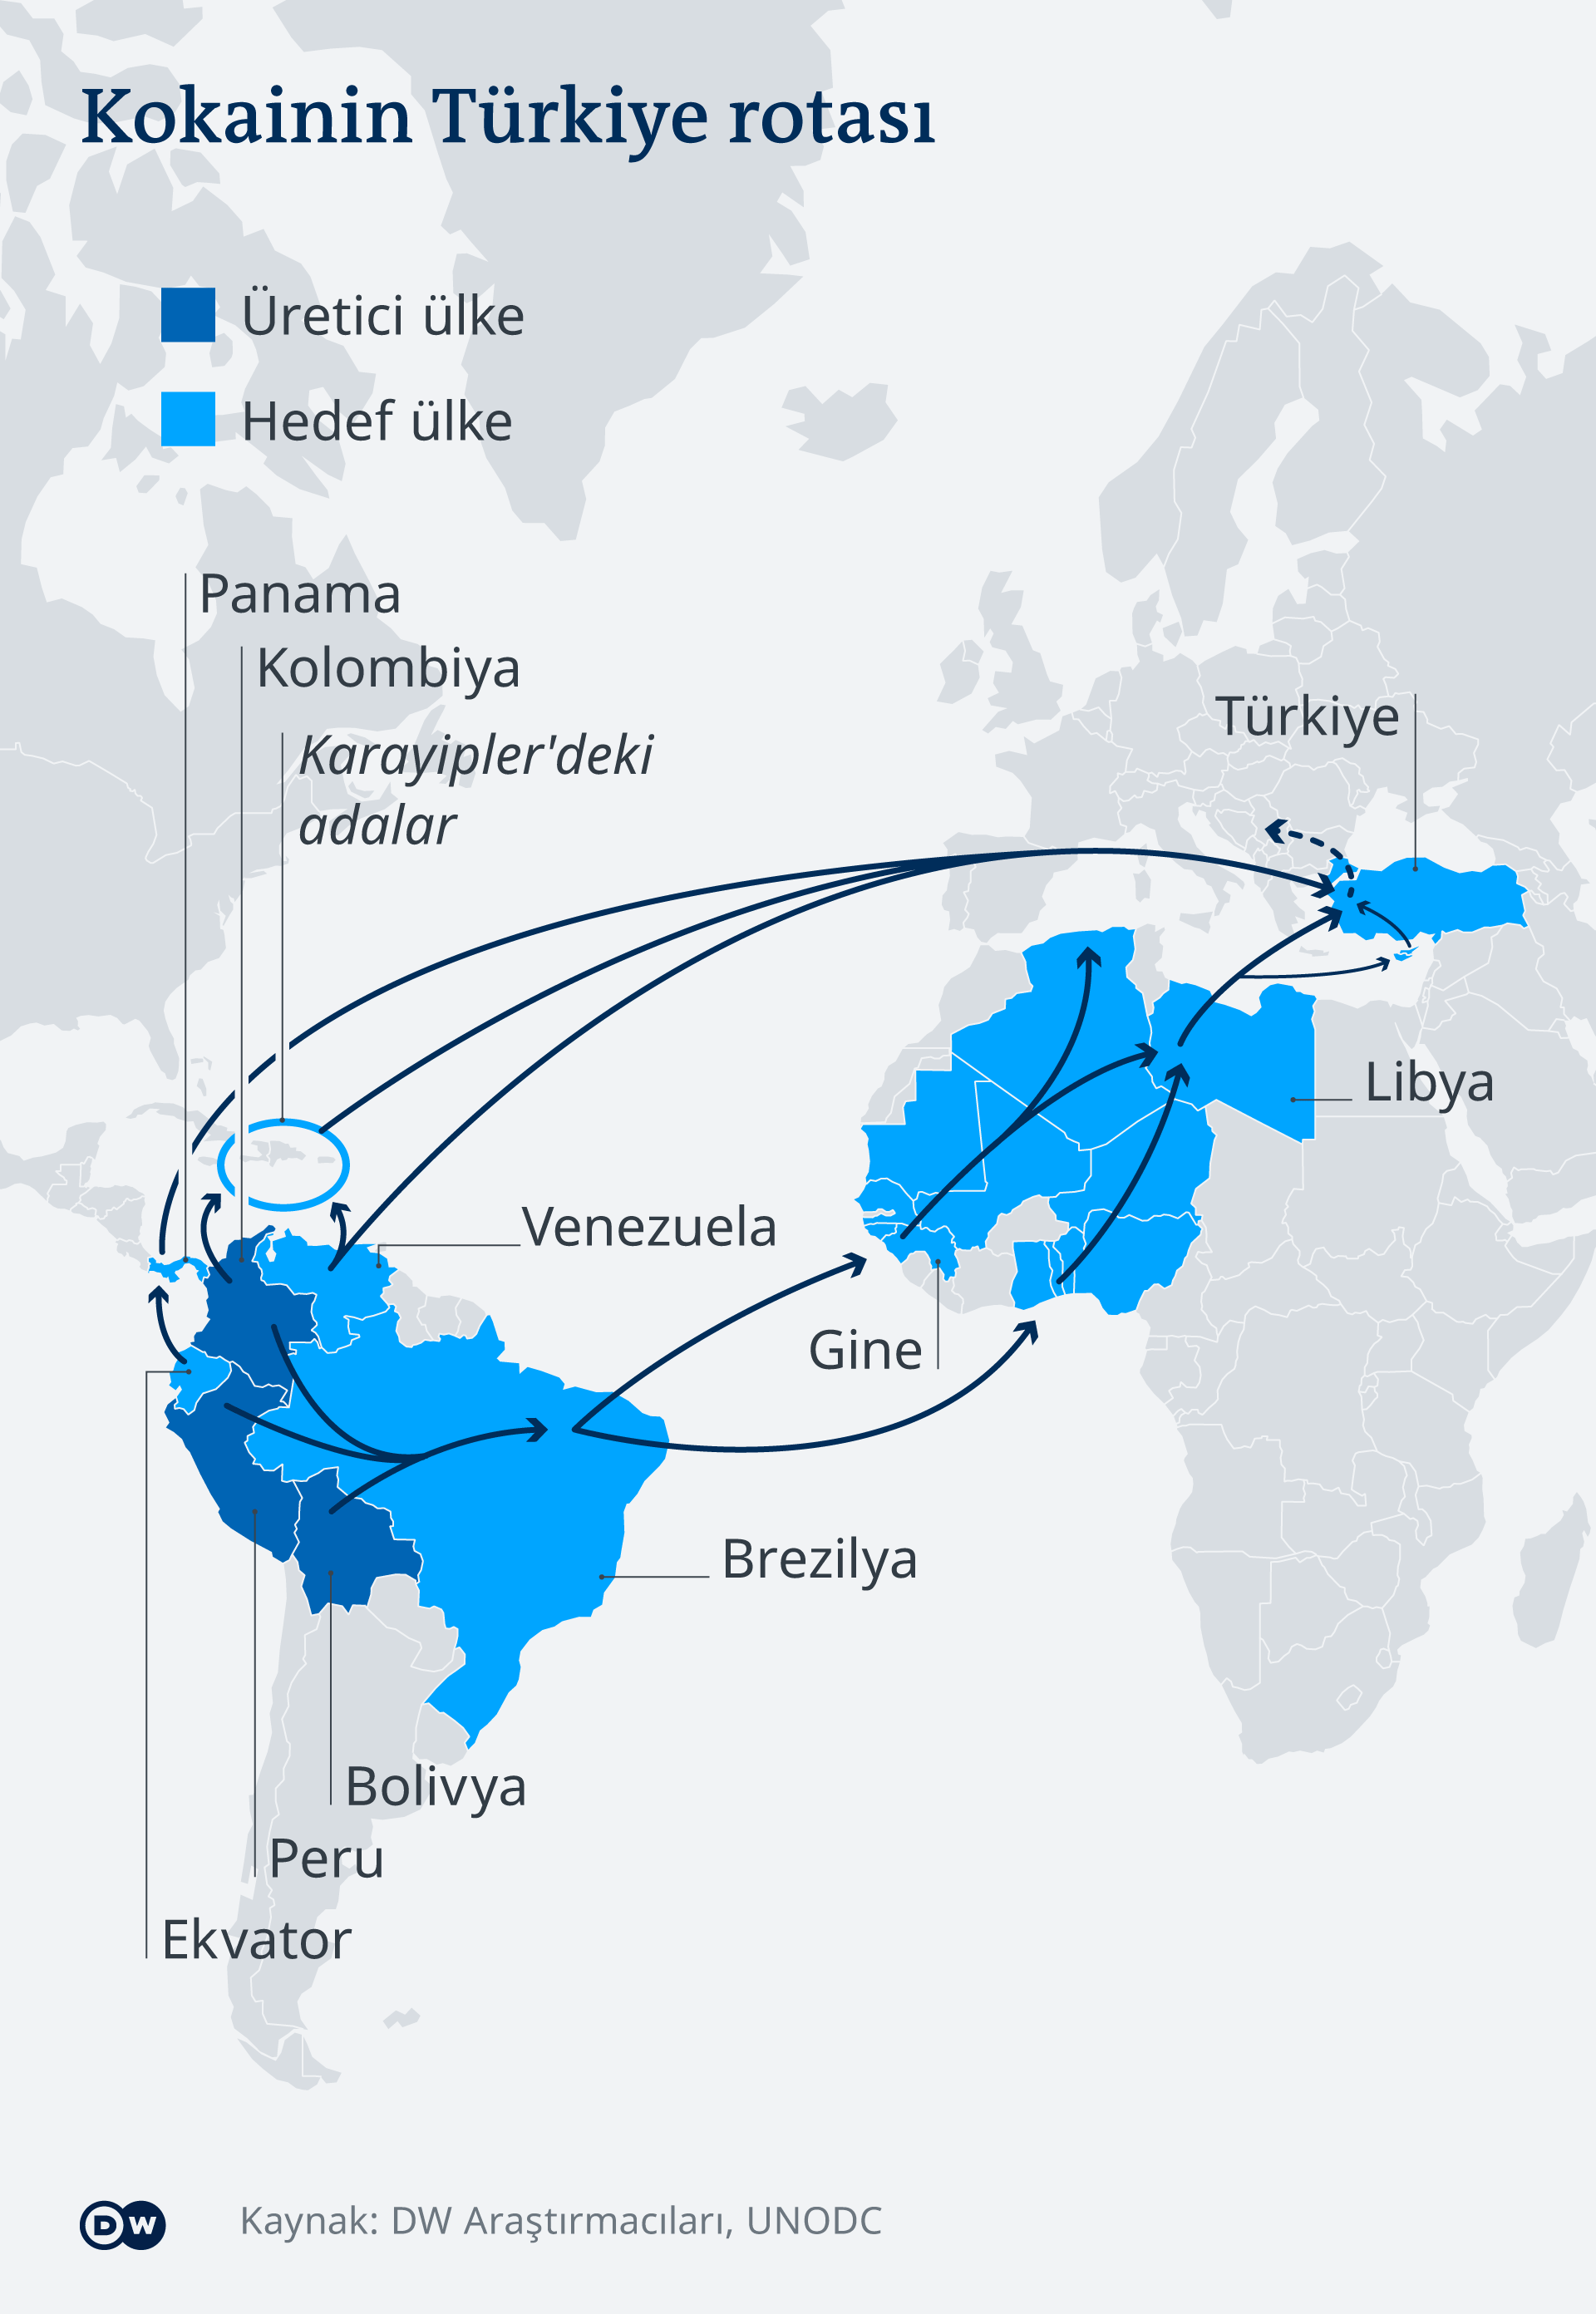 Infografik Kokainwege Lateinamerika nach der Türkei TR